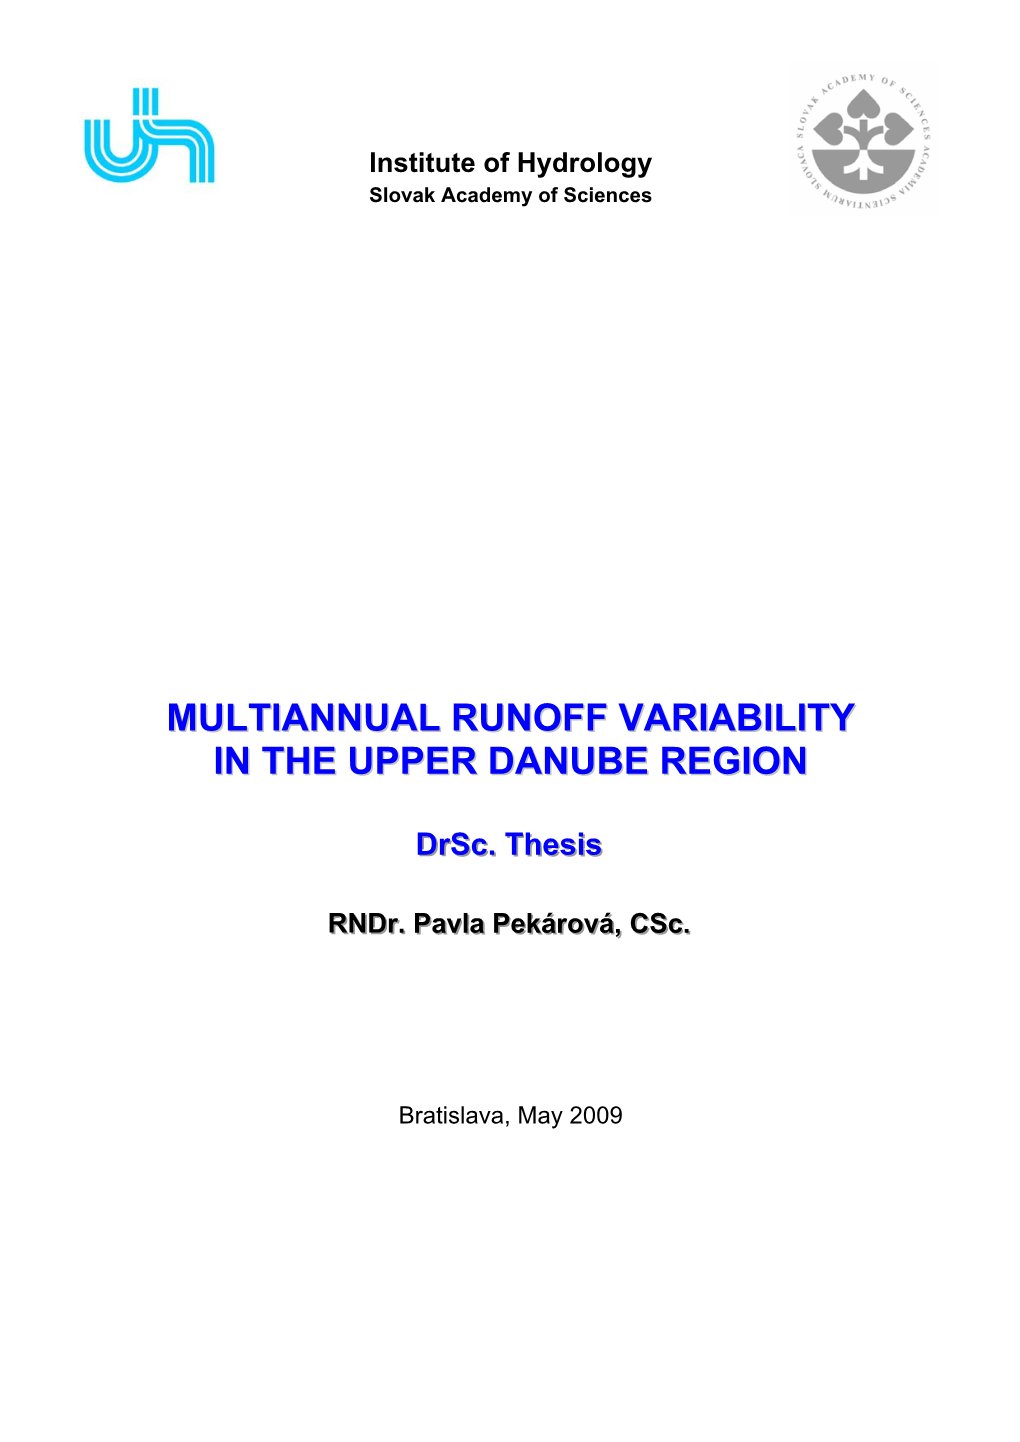 Multiannual Runoff Variability in the Upper Danube Region